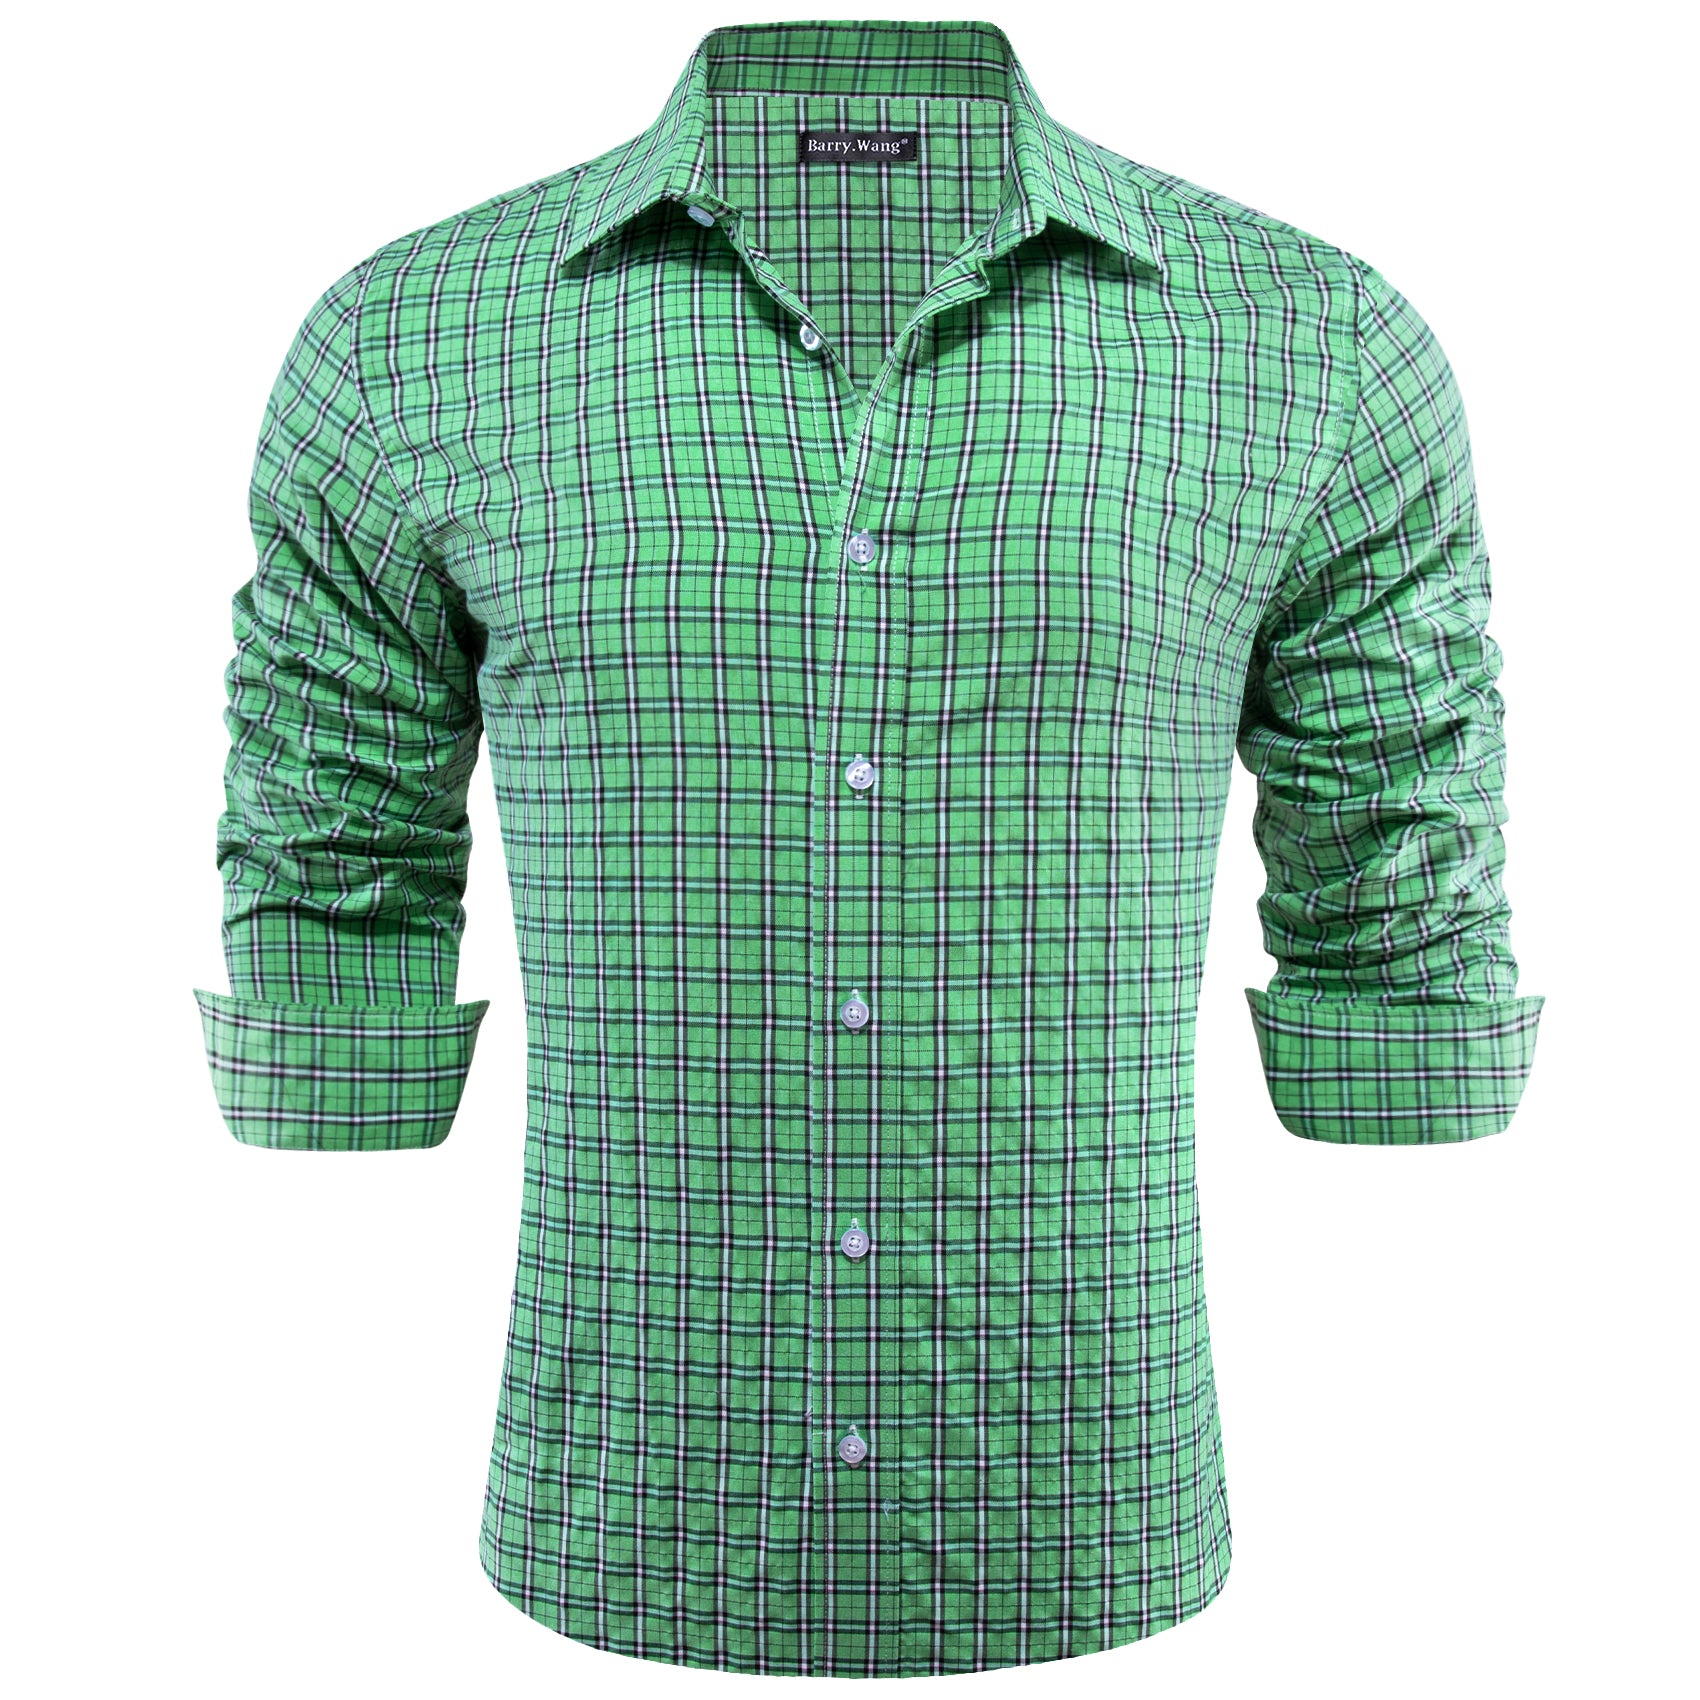 Barry.wang Green Plaid Men's Shirt